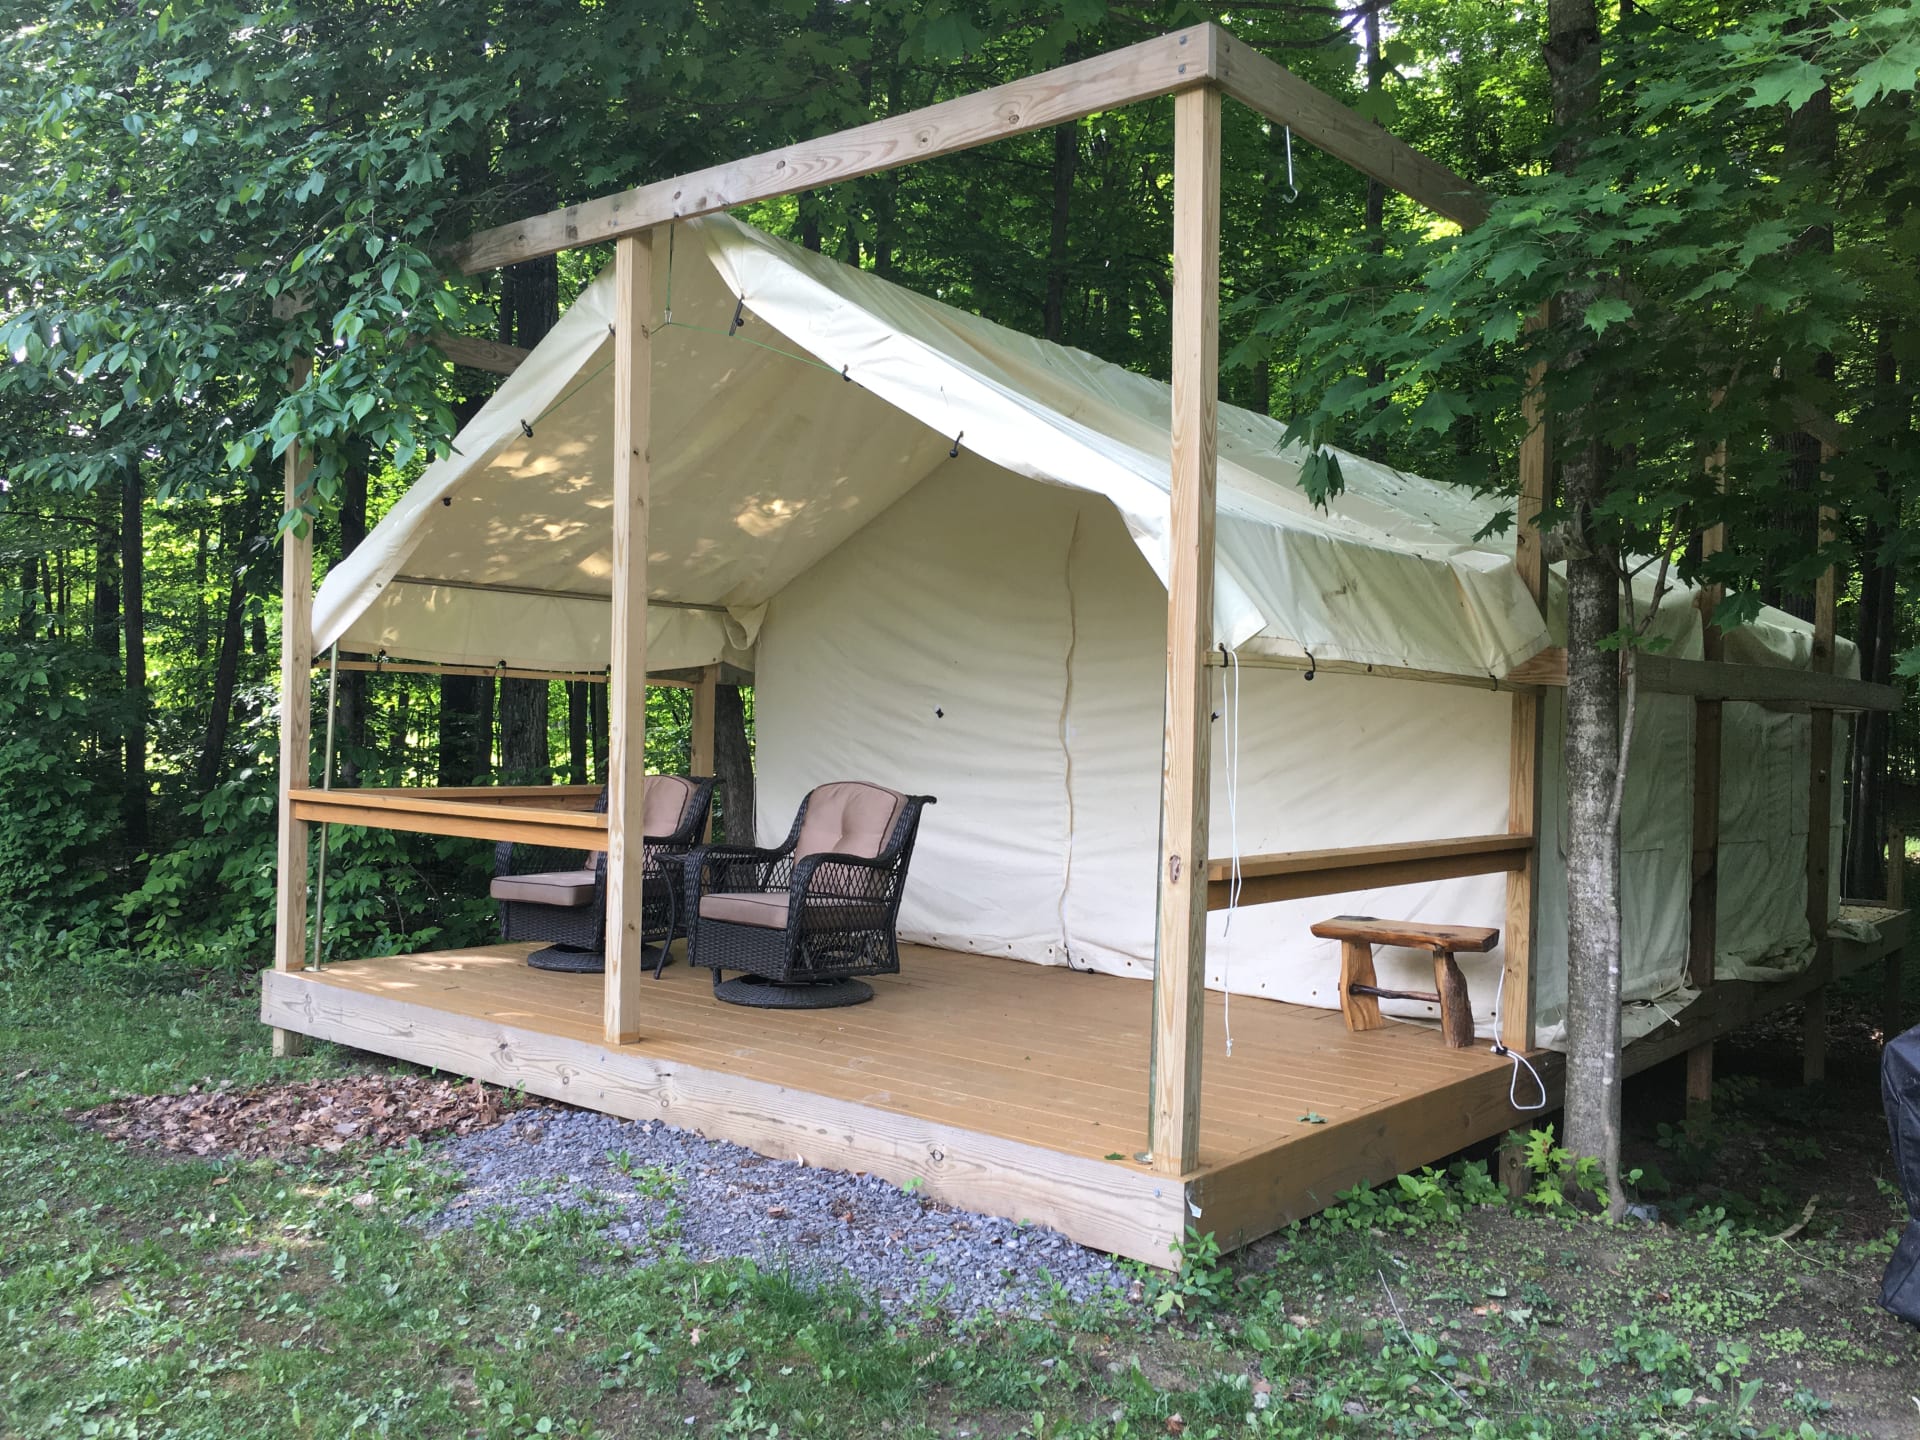 Brand-new boutique safari tent in 2021 on raised wooden platform. 